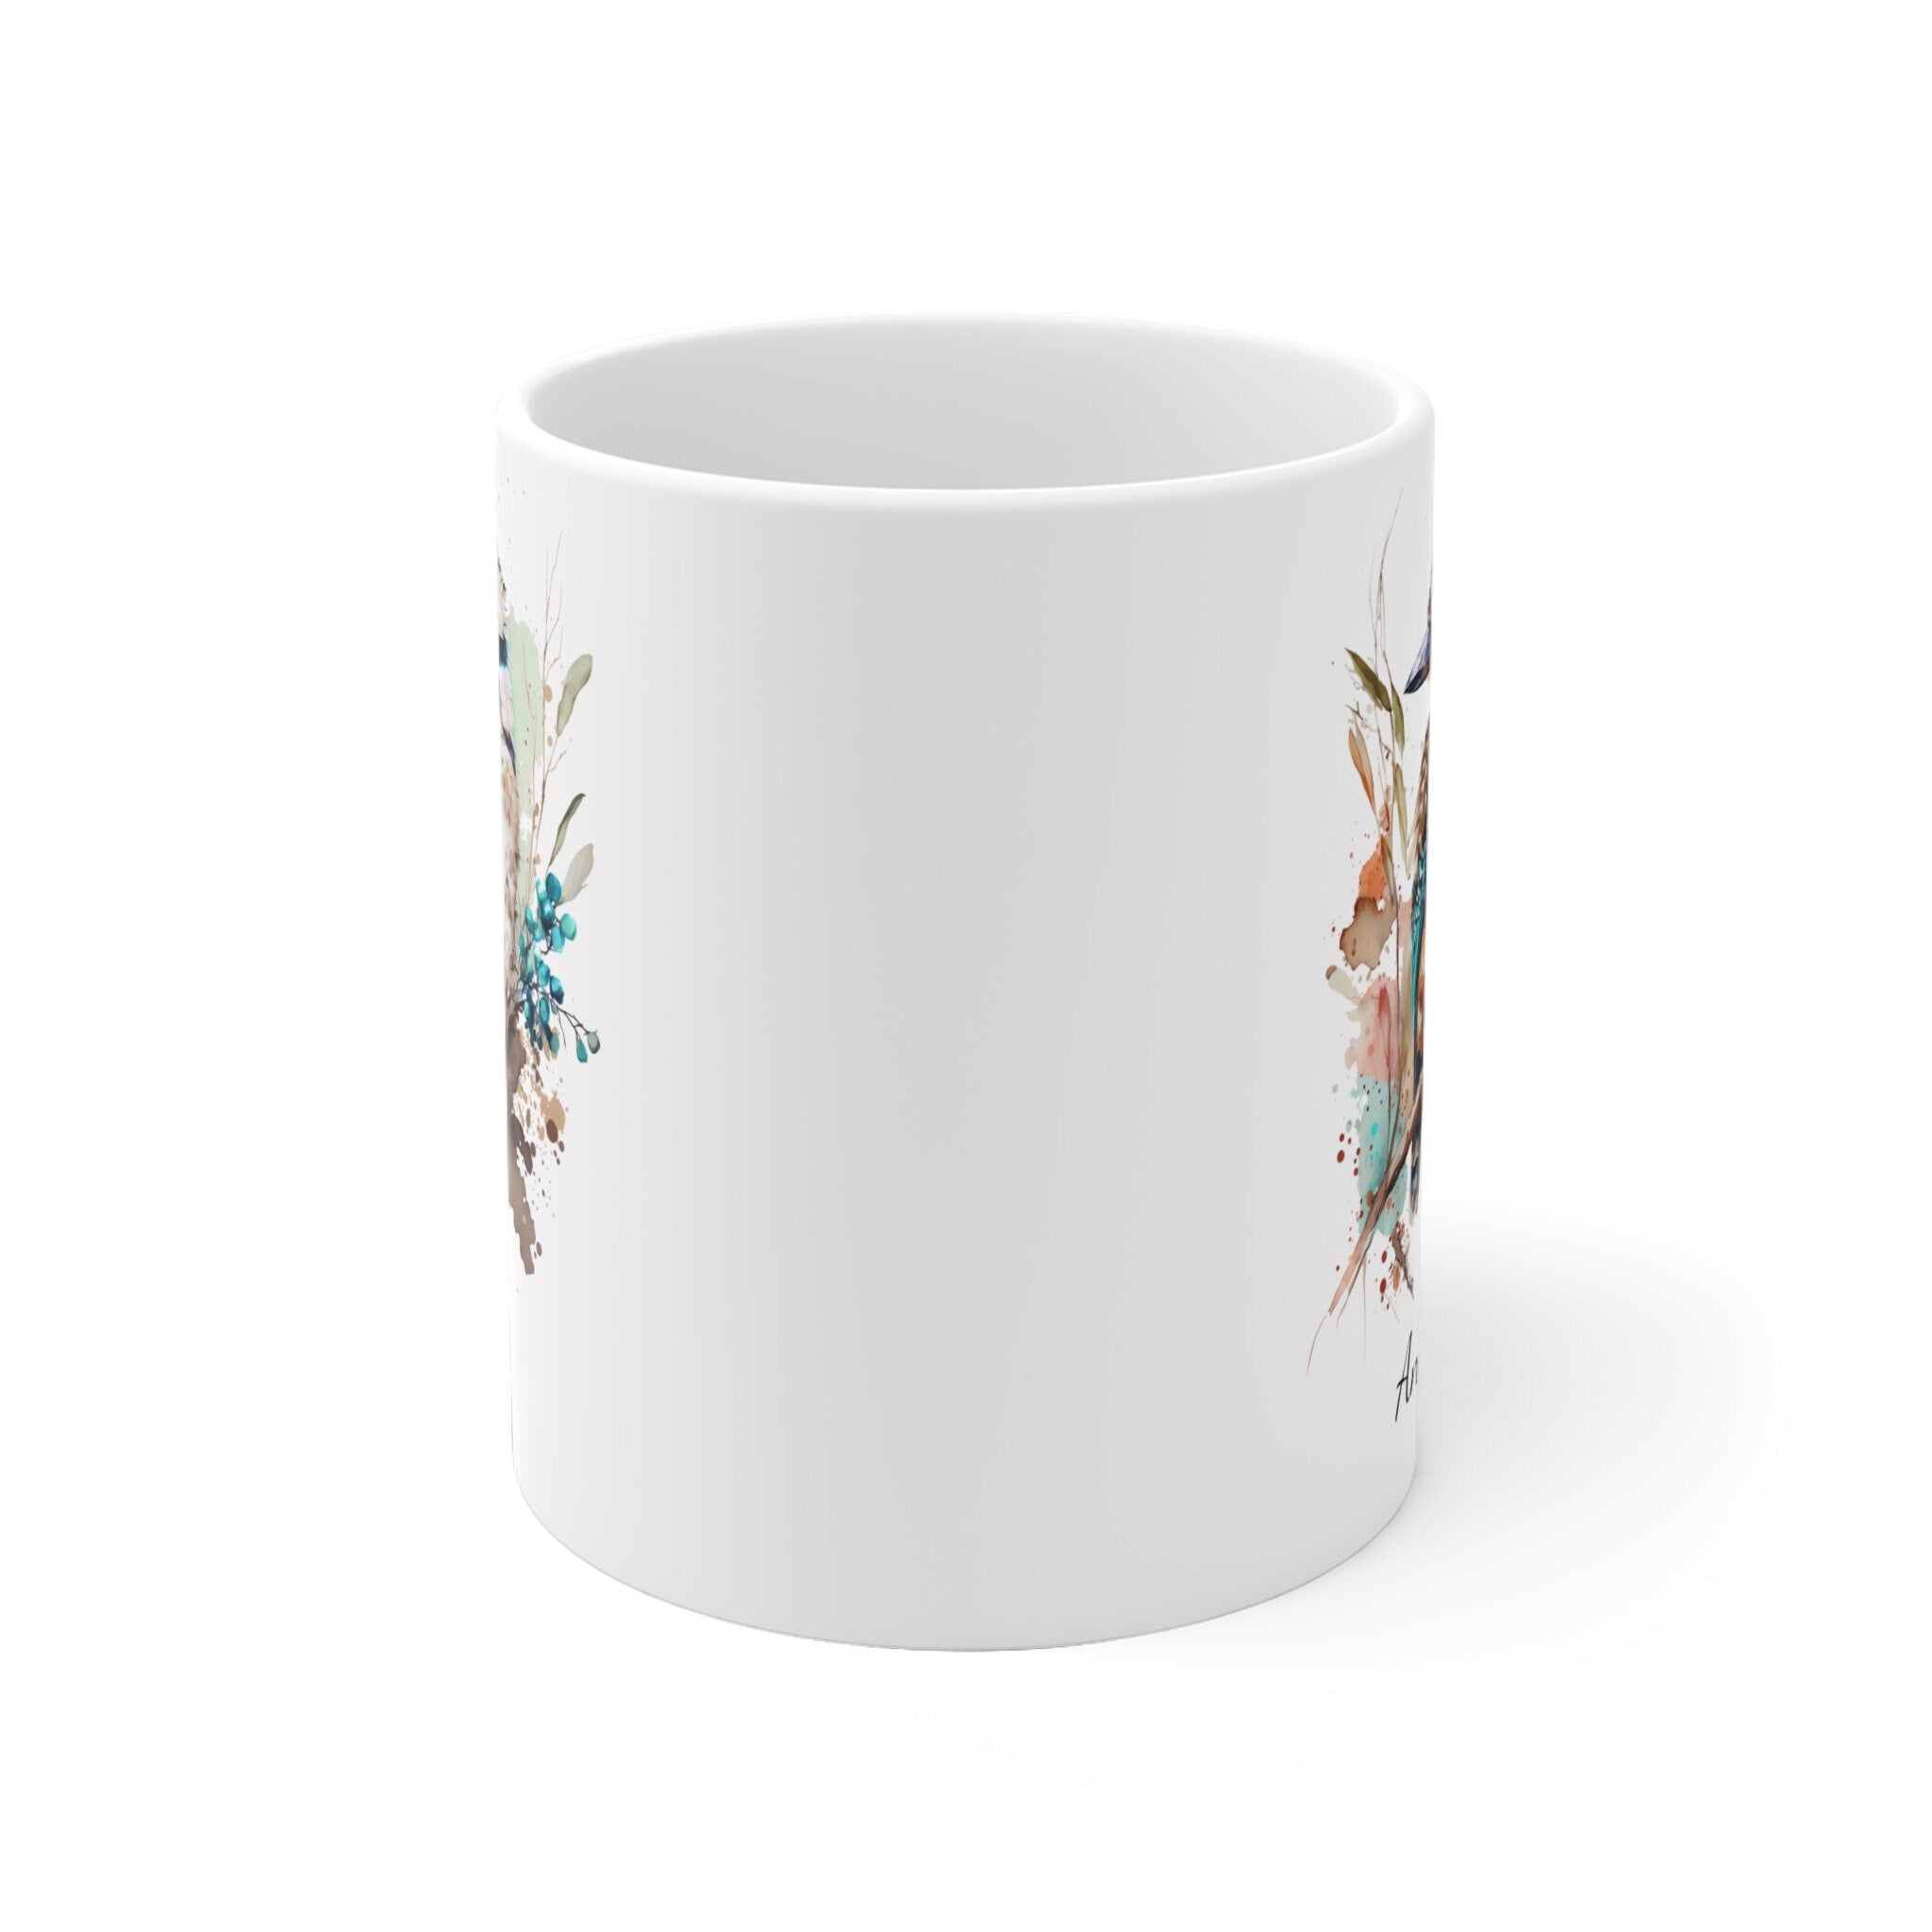 Personalized Kookaburra Coffee Mug